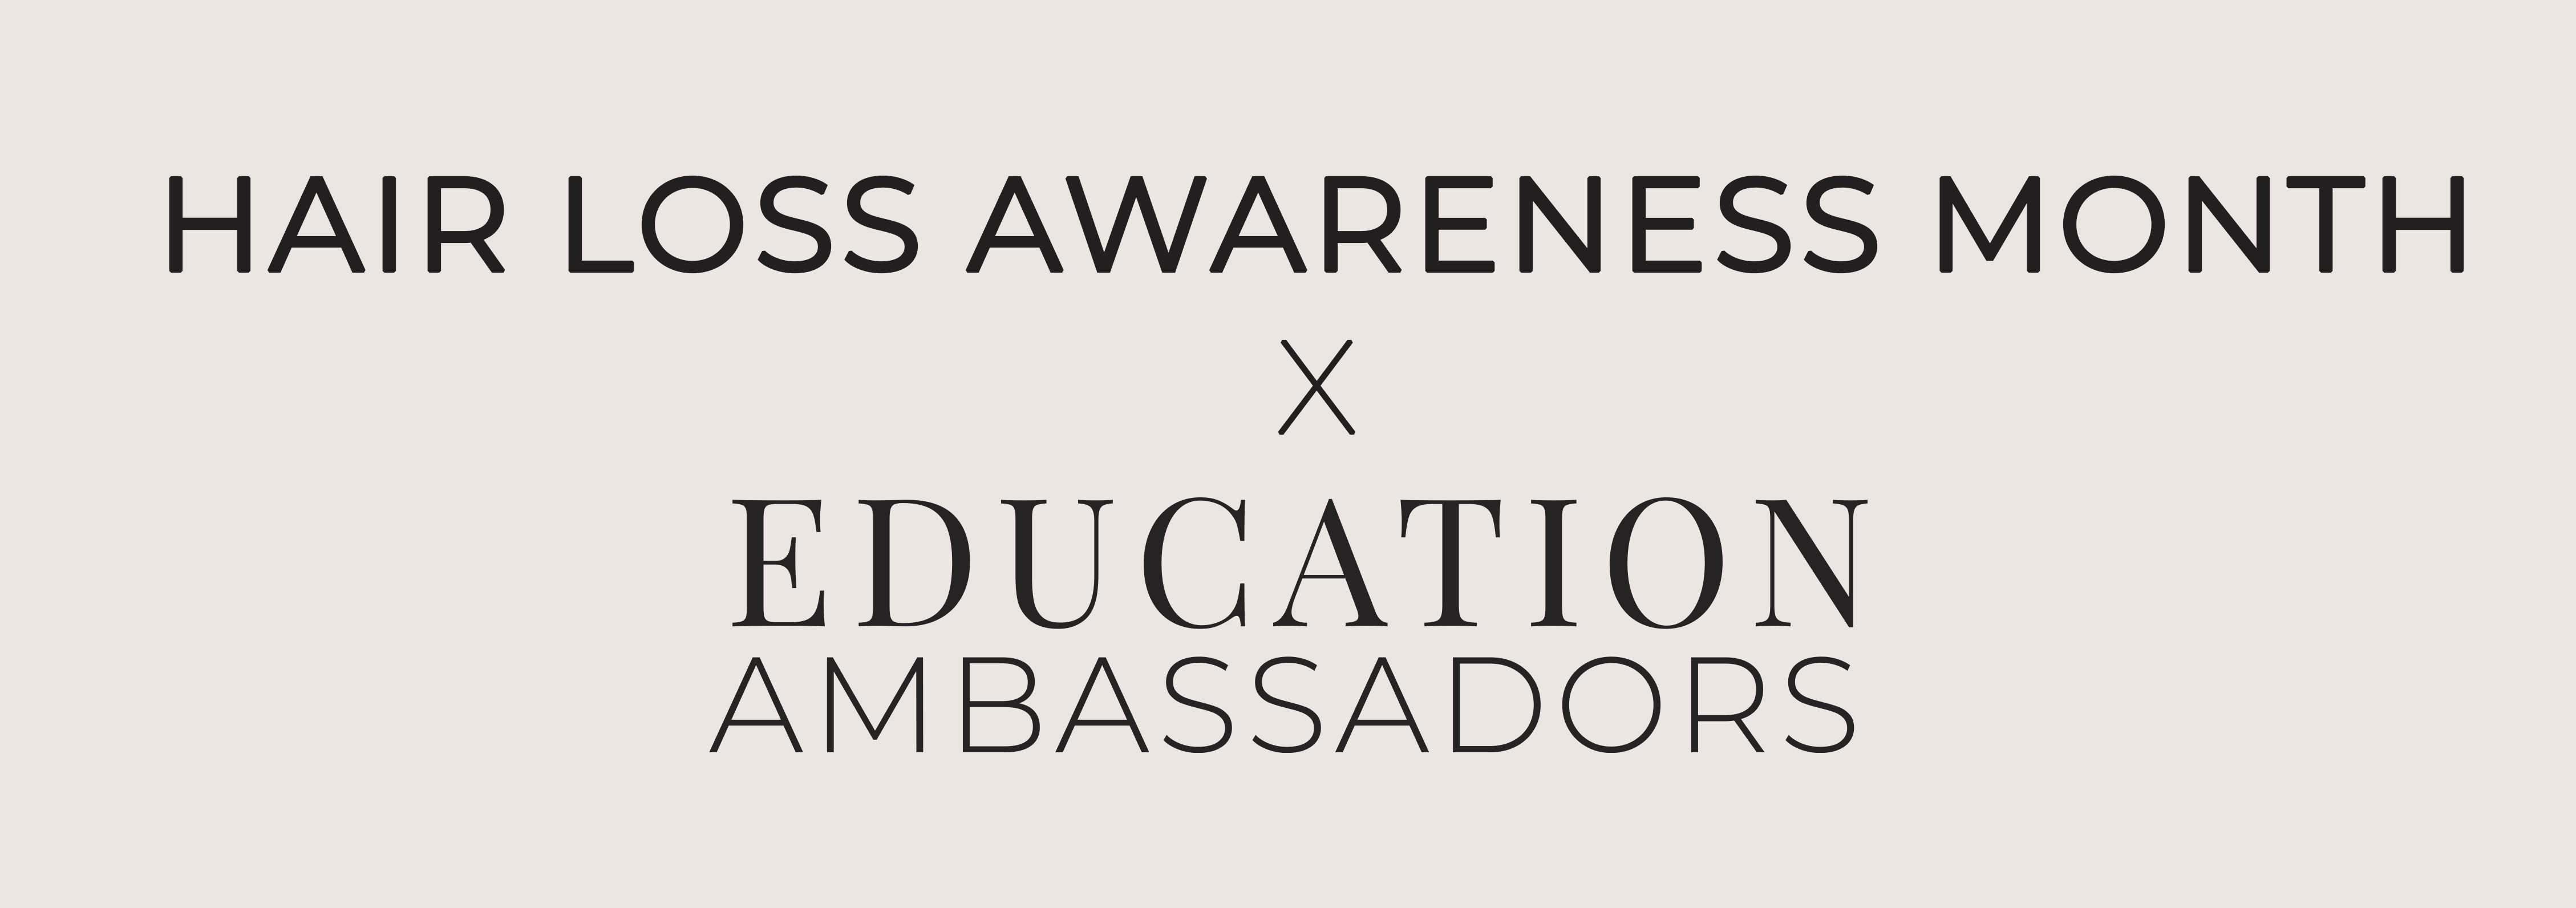 Hair Loss Awareness Month x Education Ambassadors